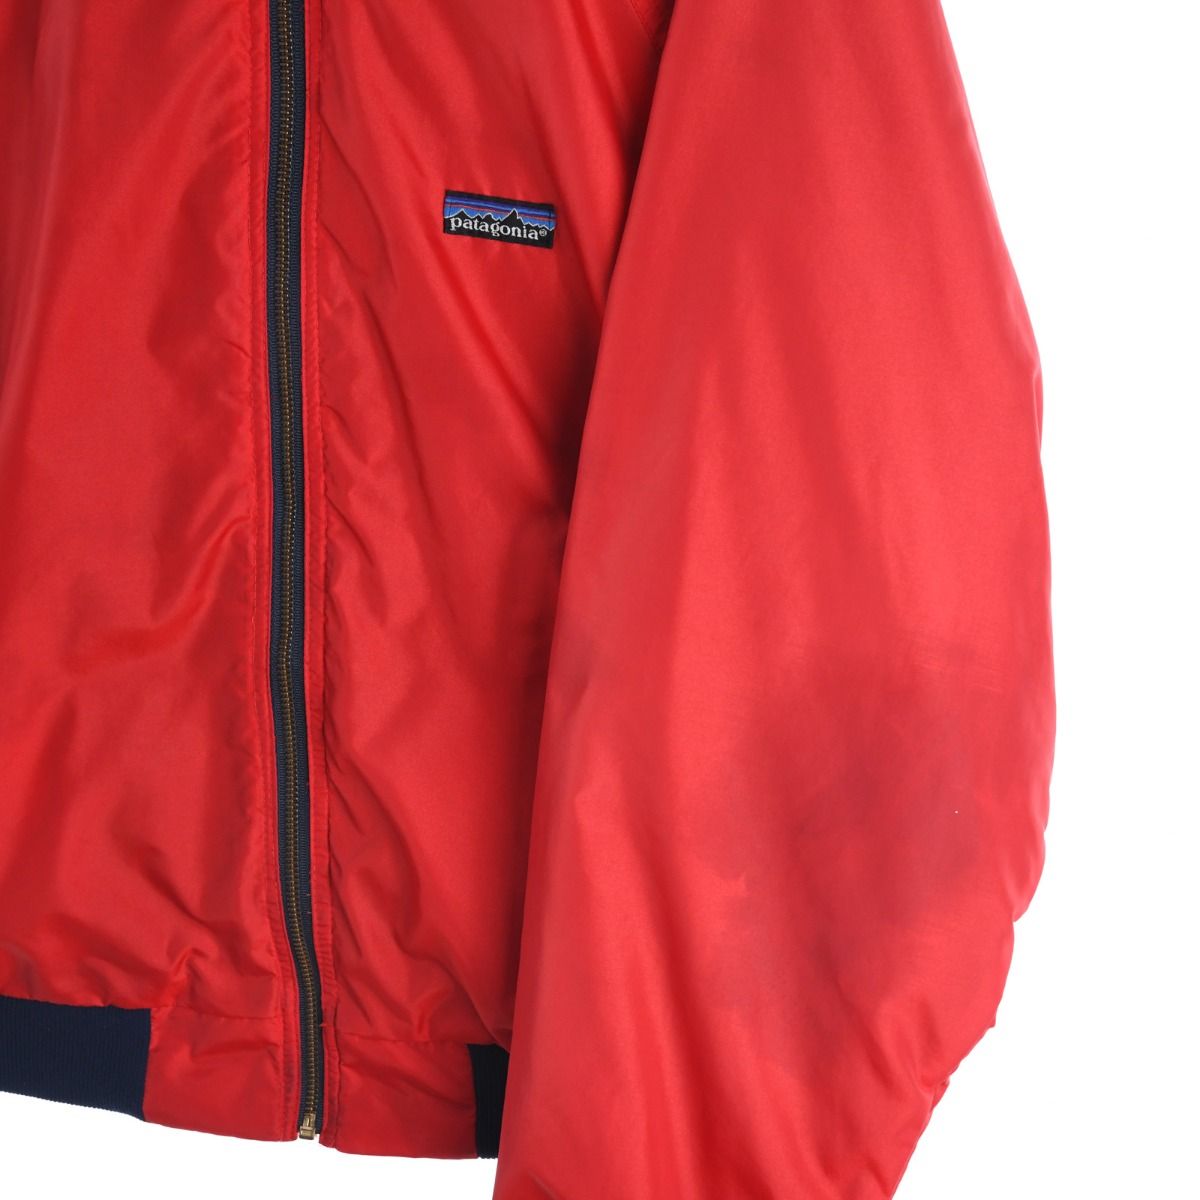 Patagonia 1980s Fleece Lined Jacket